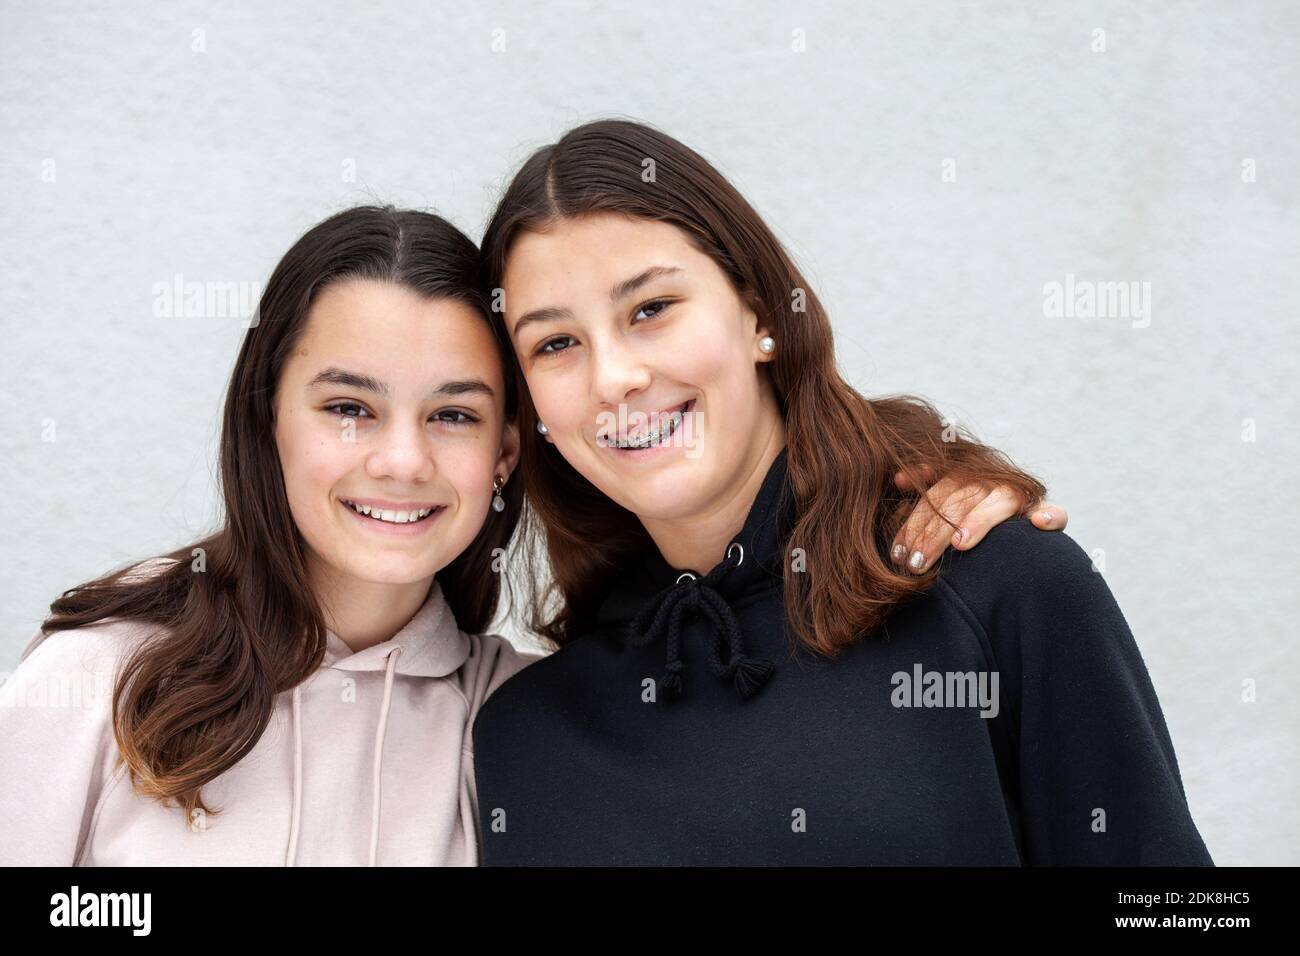 Portrait of smiling girls Stock Photo